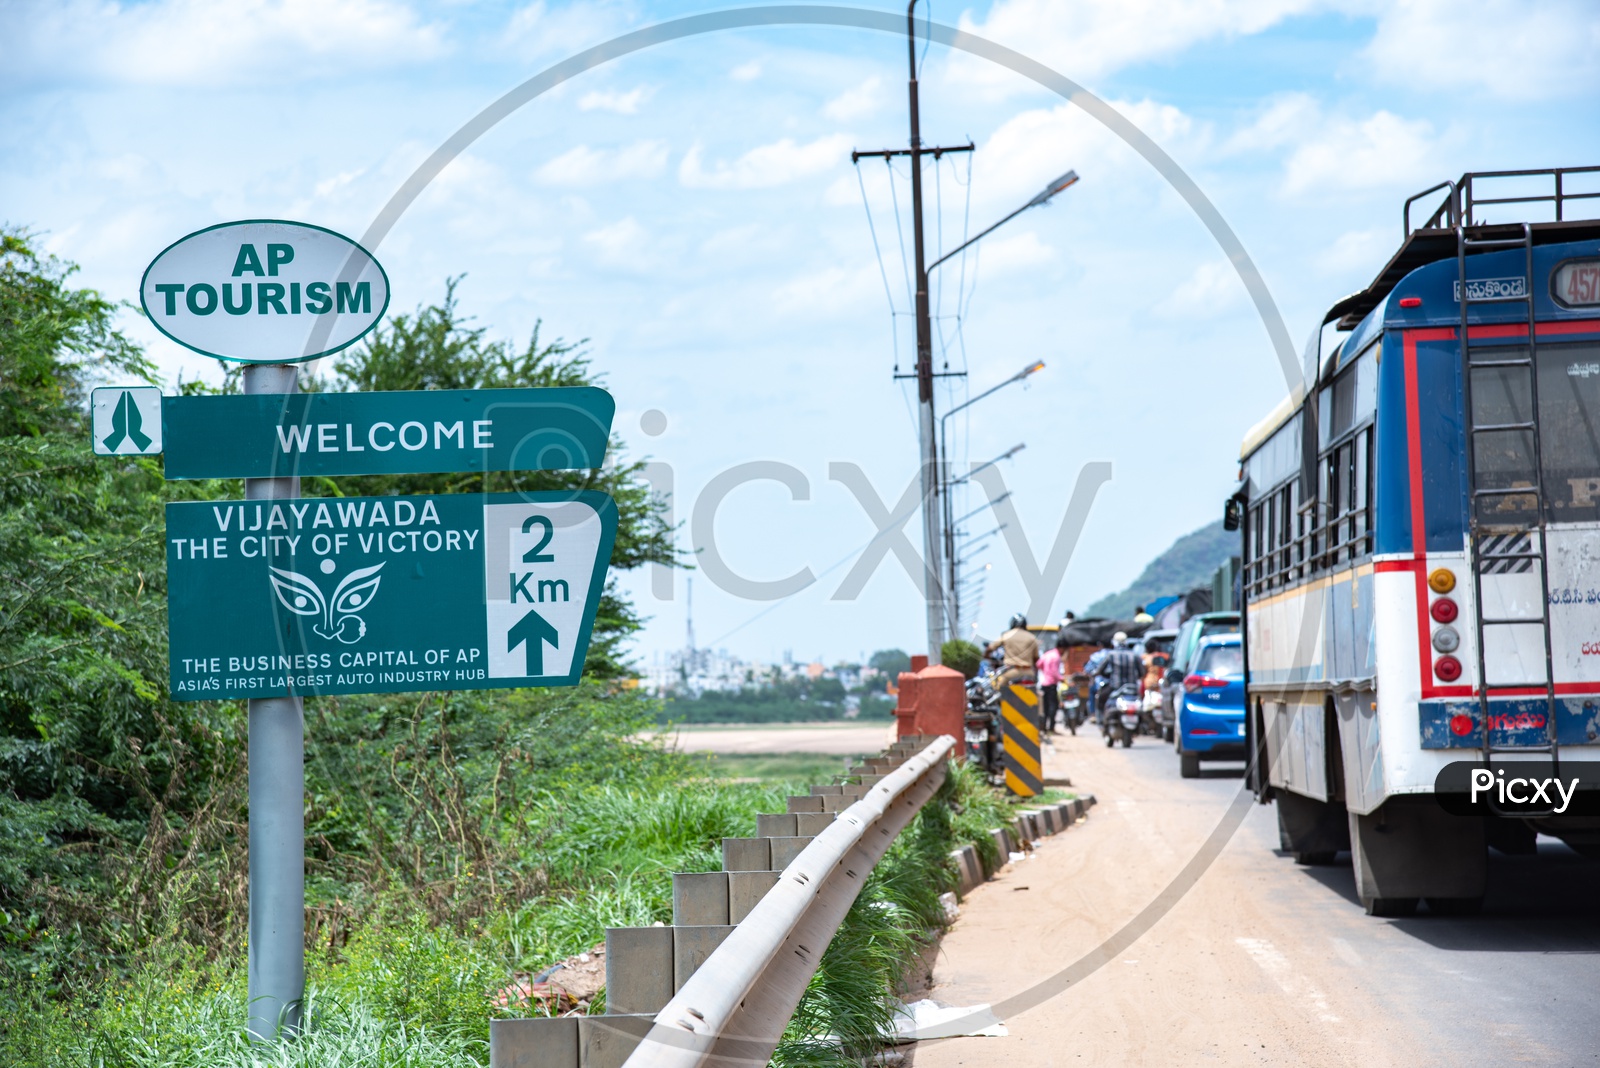 AP Tourism Information Board at Krishna Varadhi Bridge Entrance saying welcome to Vijayawada.